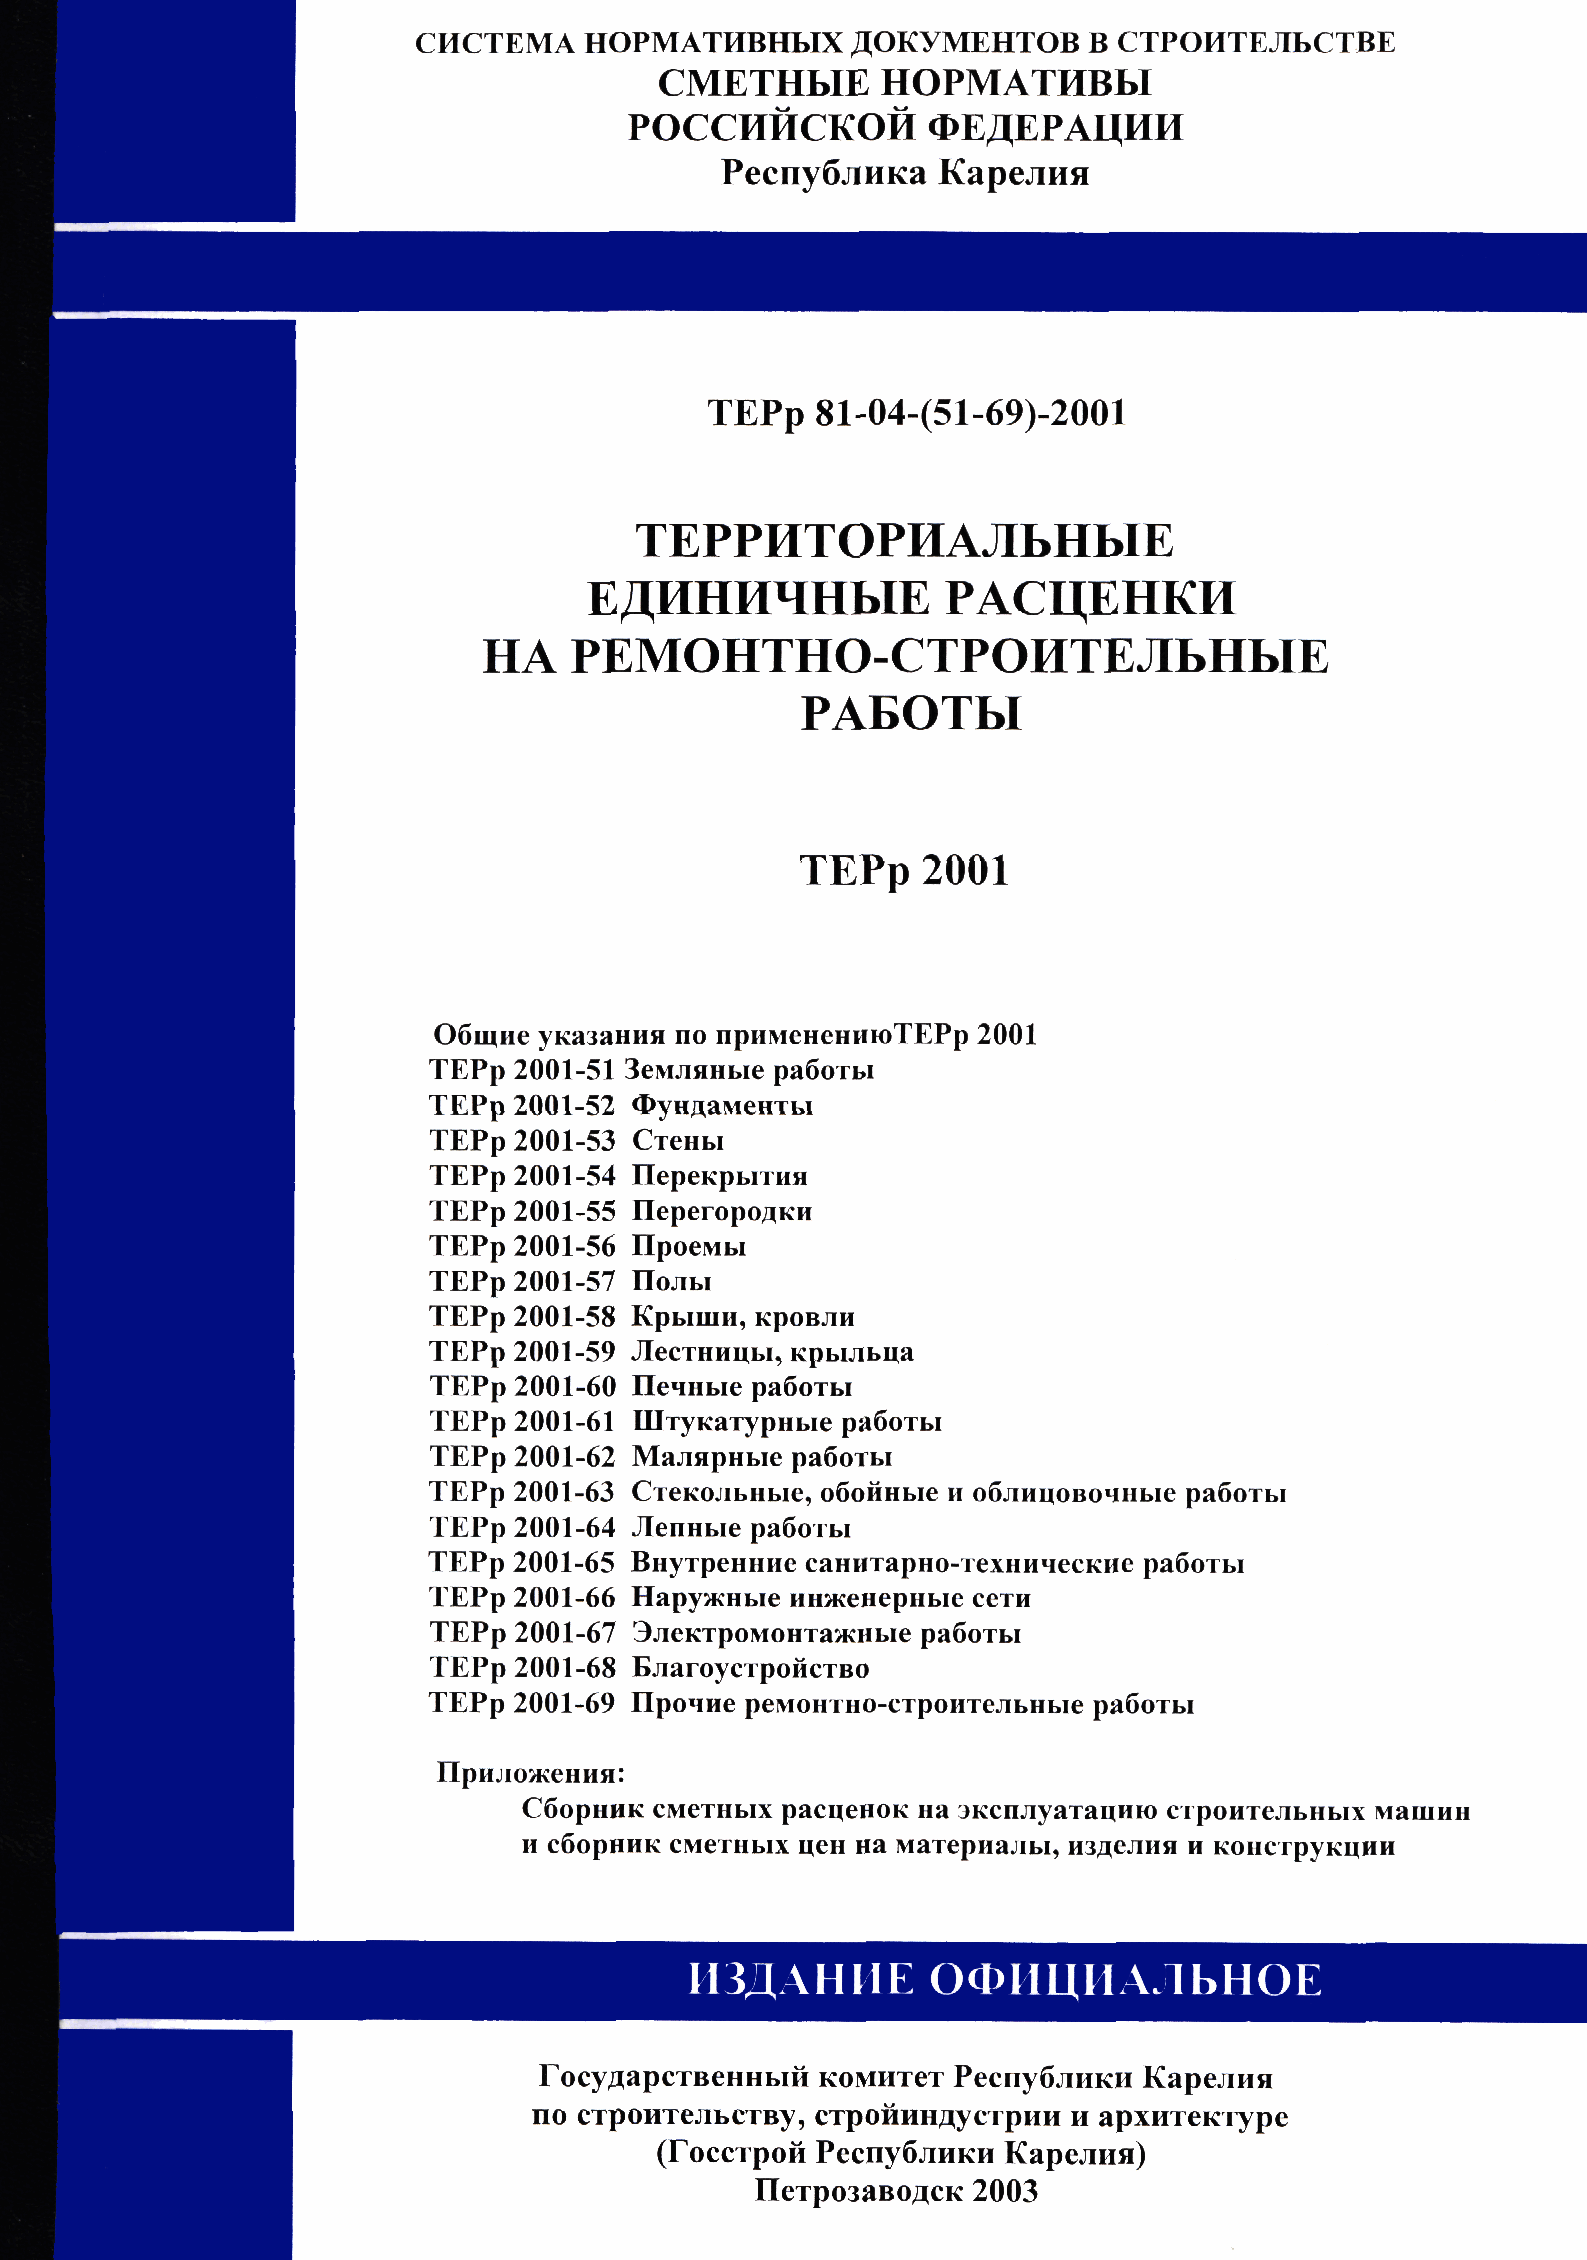 ТЕРр Республика Карелия 2001-59